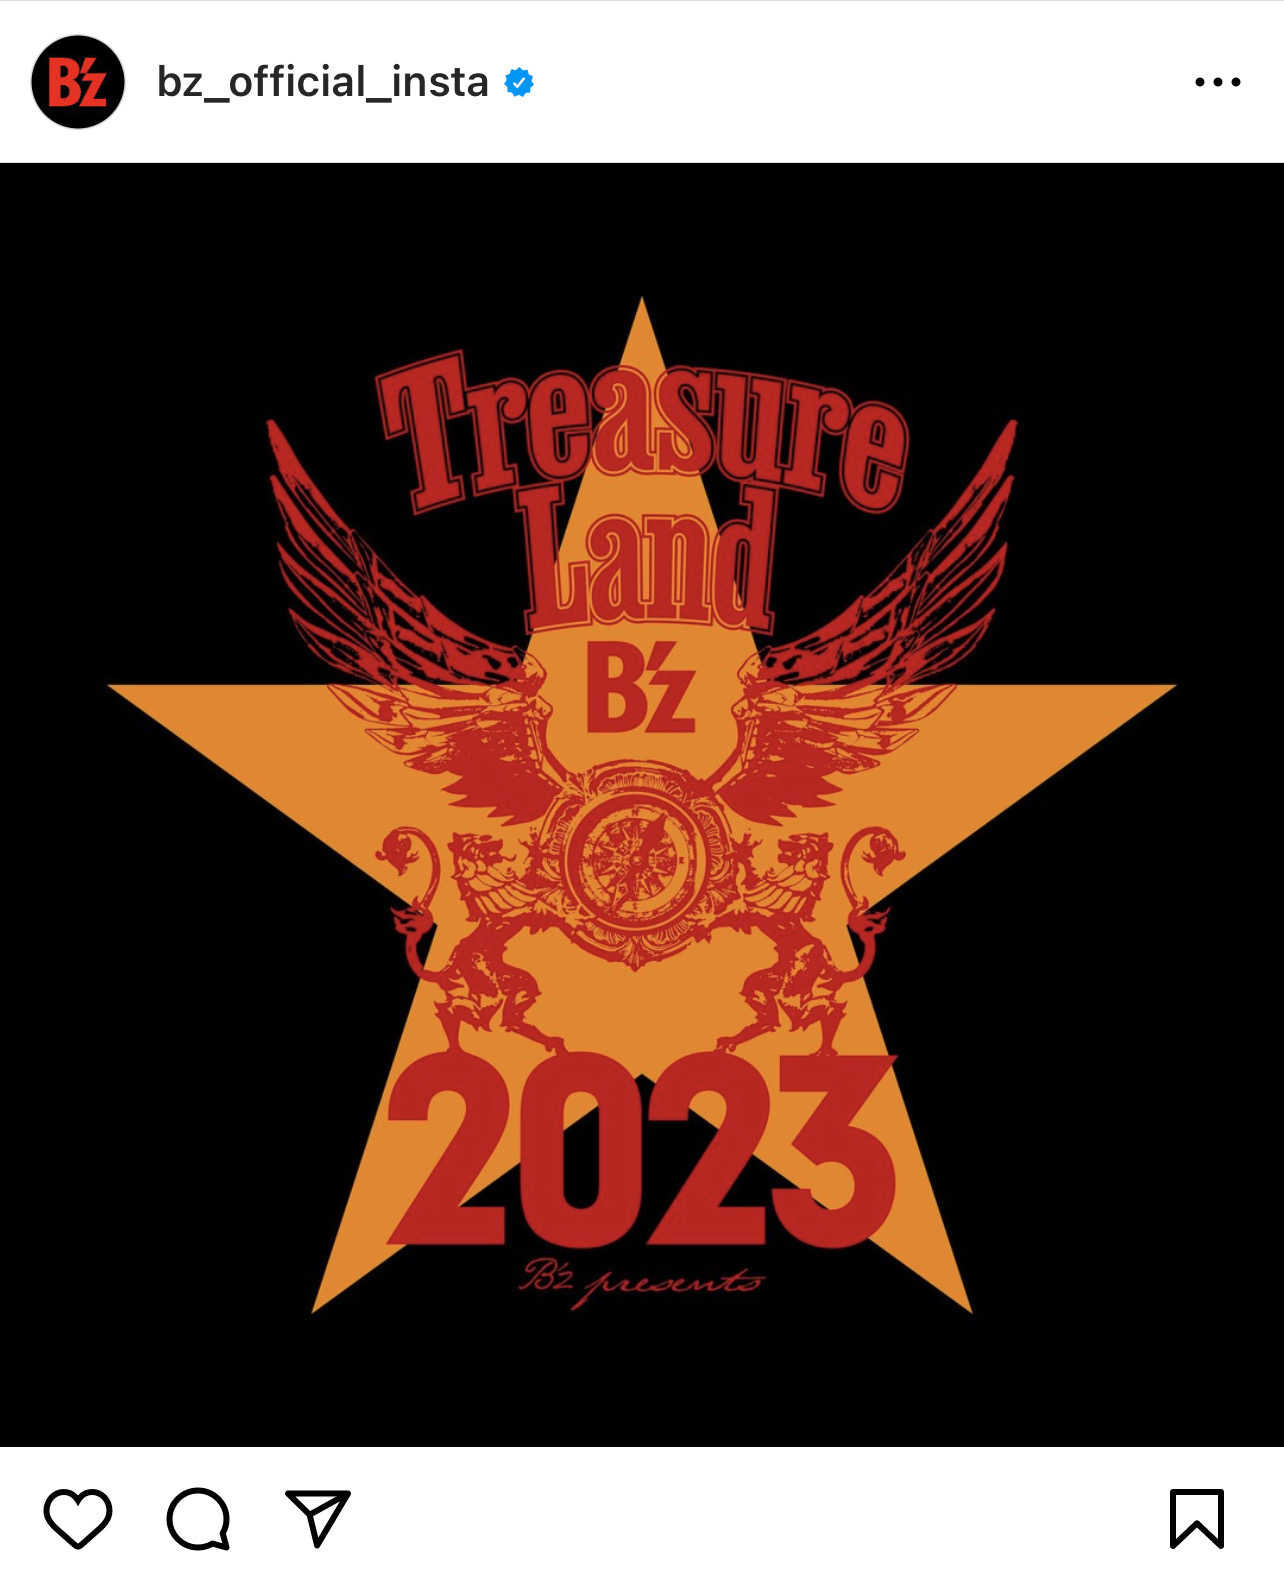 『B’z presents -Treasure Land 2023-』のロゴマーク